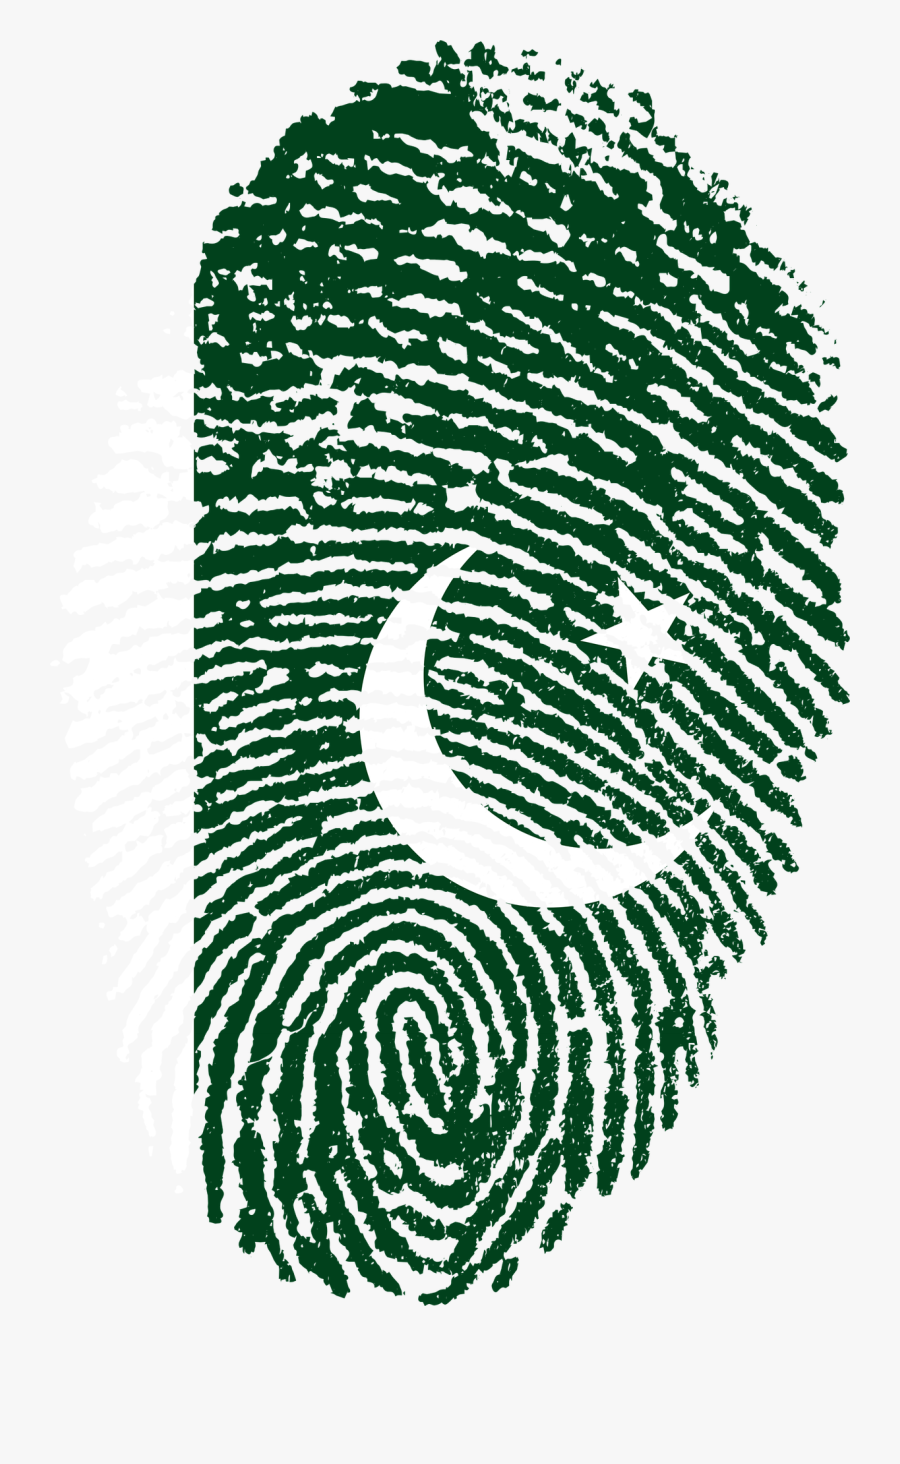 Pakistan Fingerprint - Challenges Of Digital India, Transparent Clipart